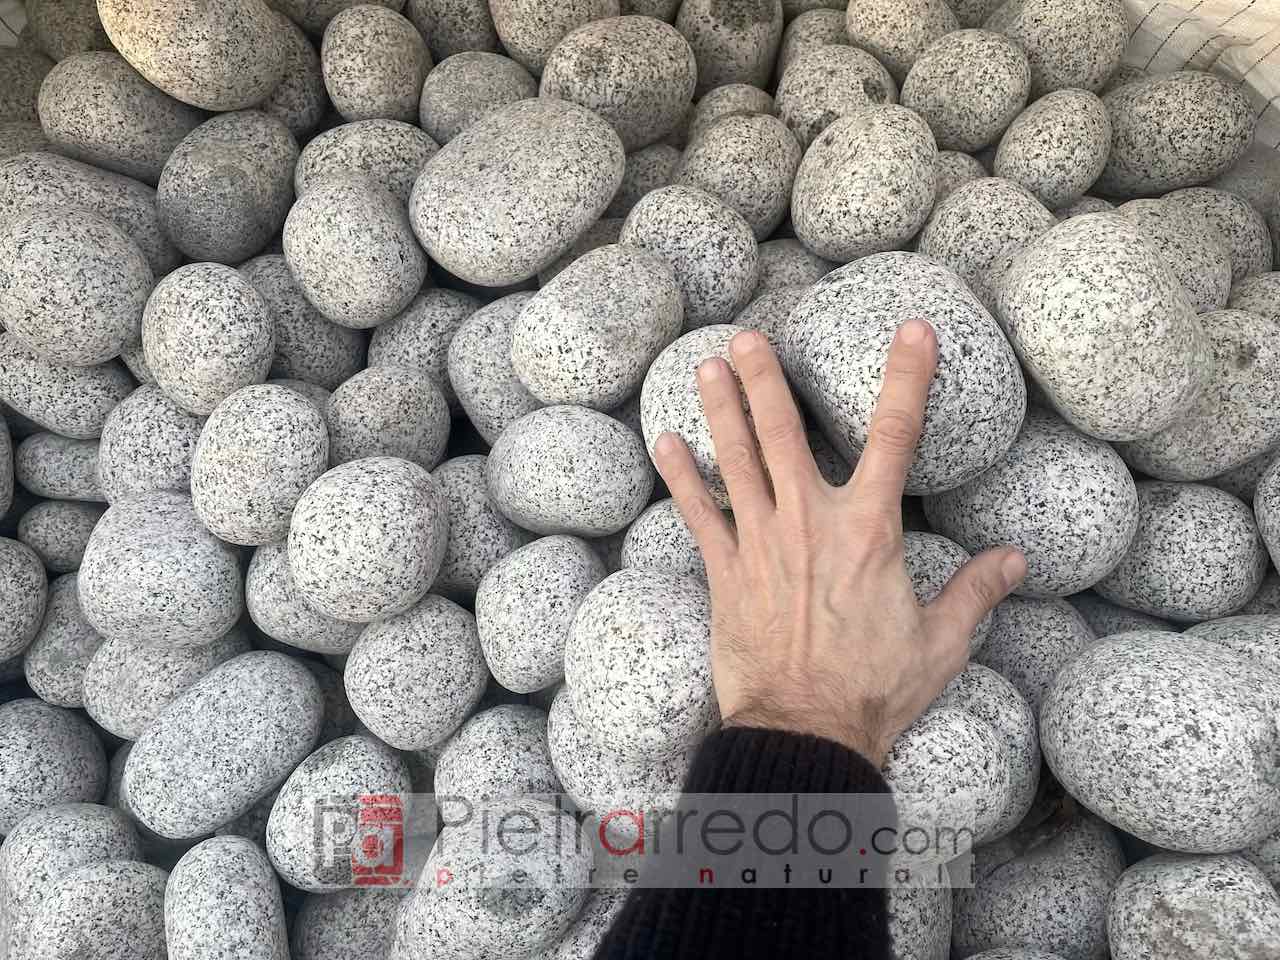 pebble salt white pepper Montorfano granite round spherical stone garden garden furniture price cost pietarrredo